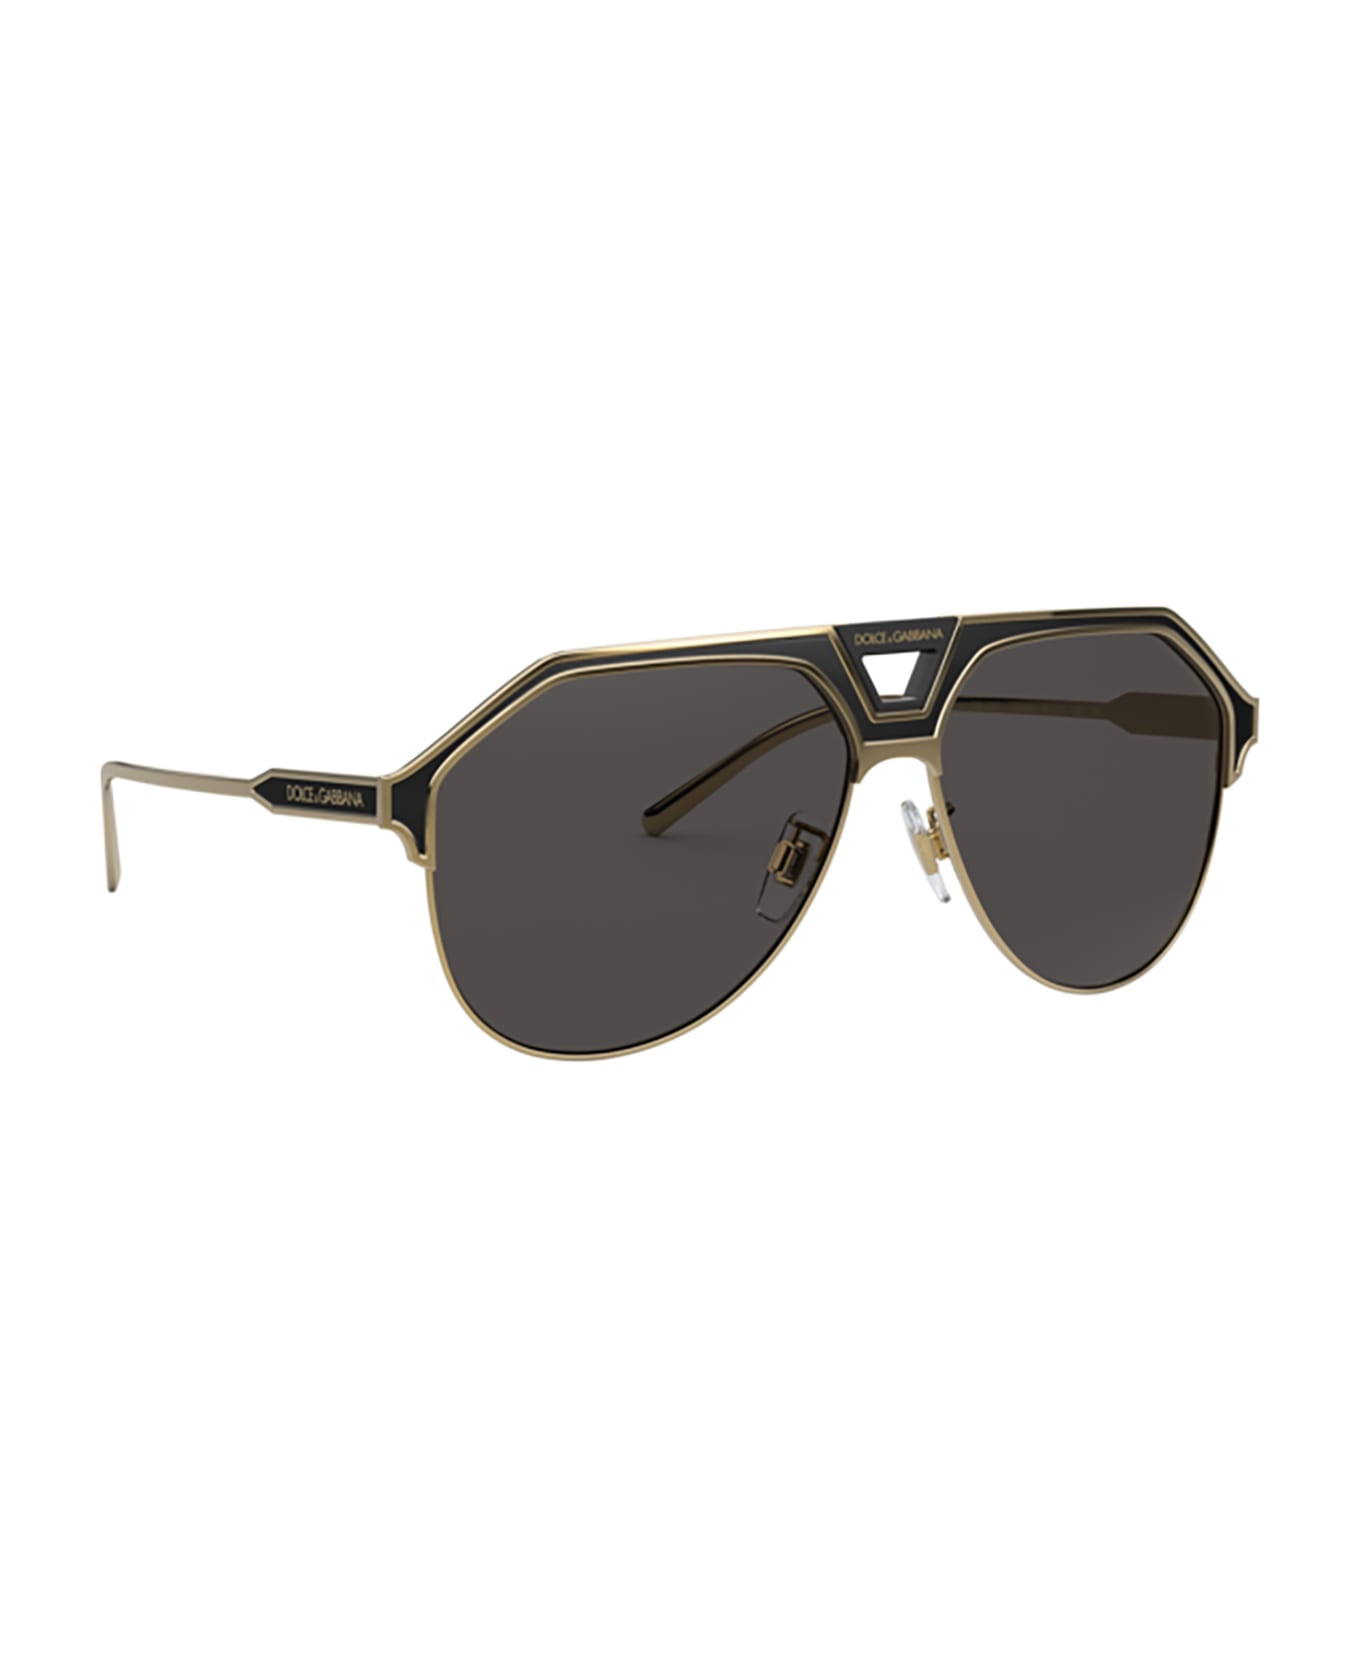 Dolce & Gabbana Eyewear Dg2257 Gold / Matte Black Sunglasses - Gold / Matte Black